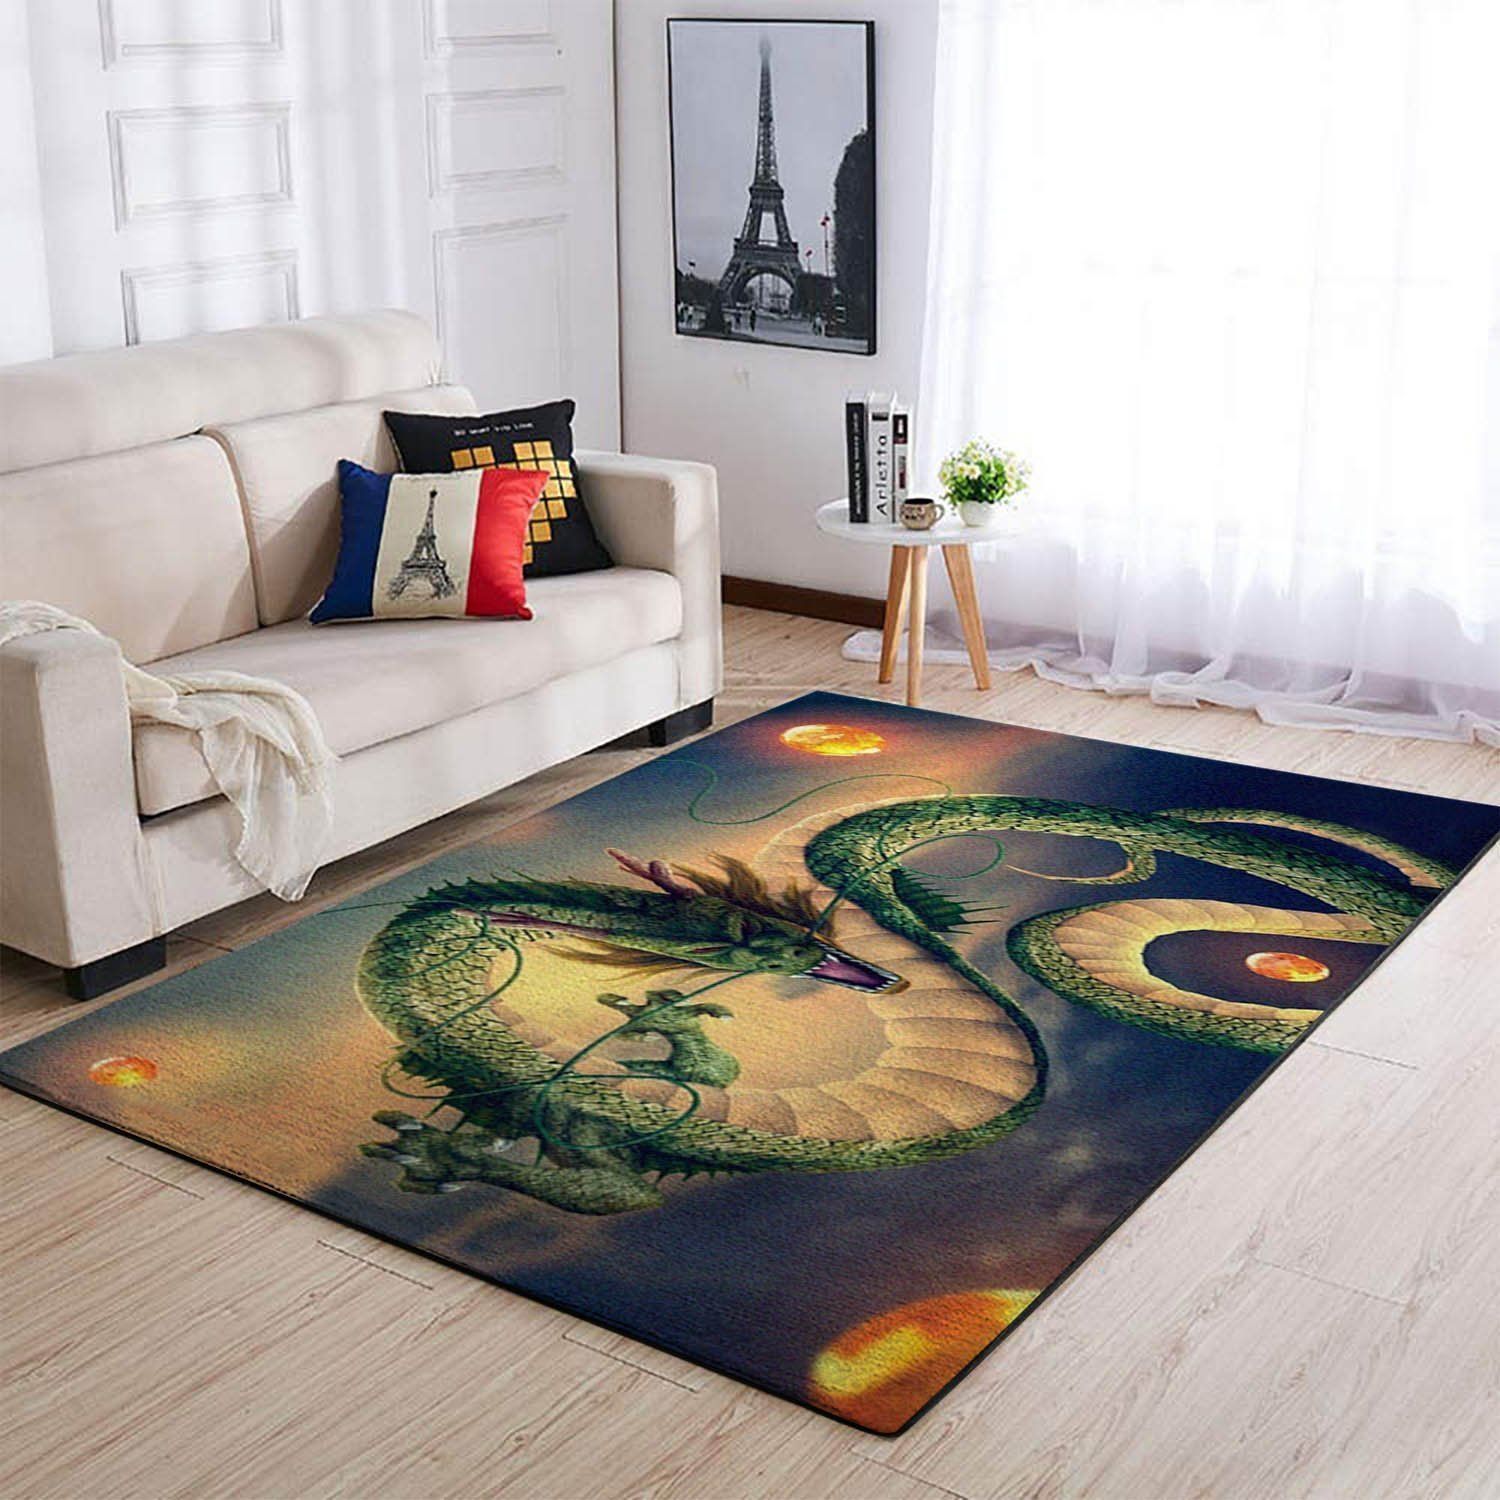 Fashion Home Decorator Dragon Ball Z Area Rug Floor Rug Carpets Custom Made 